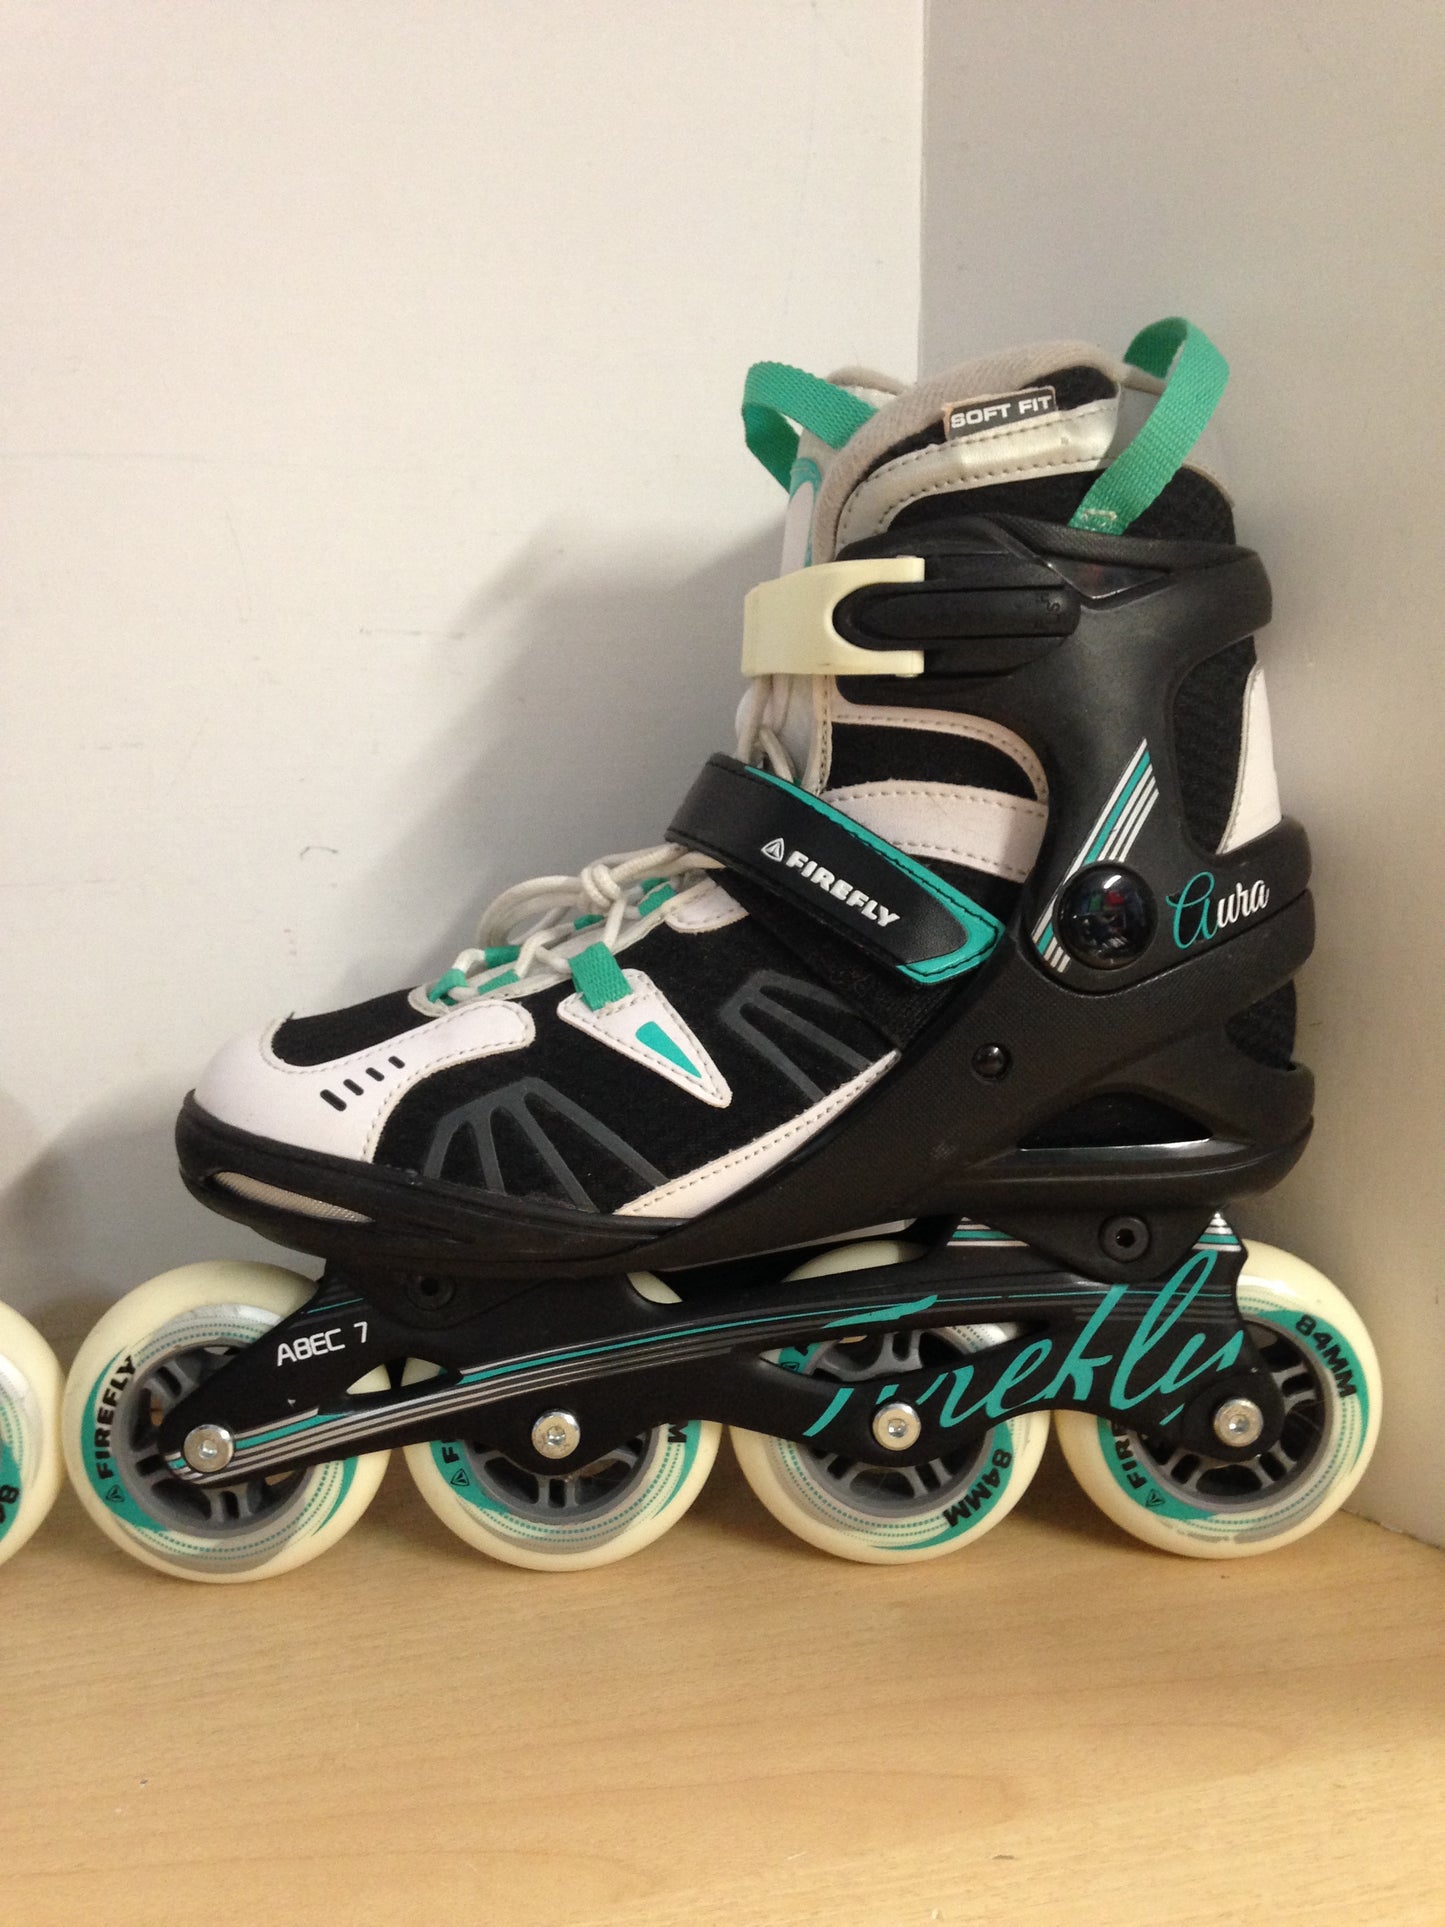 Inline Roller Skates Ladies Size 8.5 Firefly Black White Teal New Demo Model